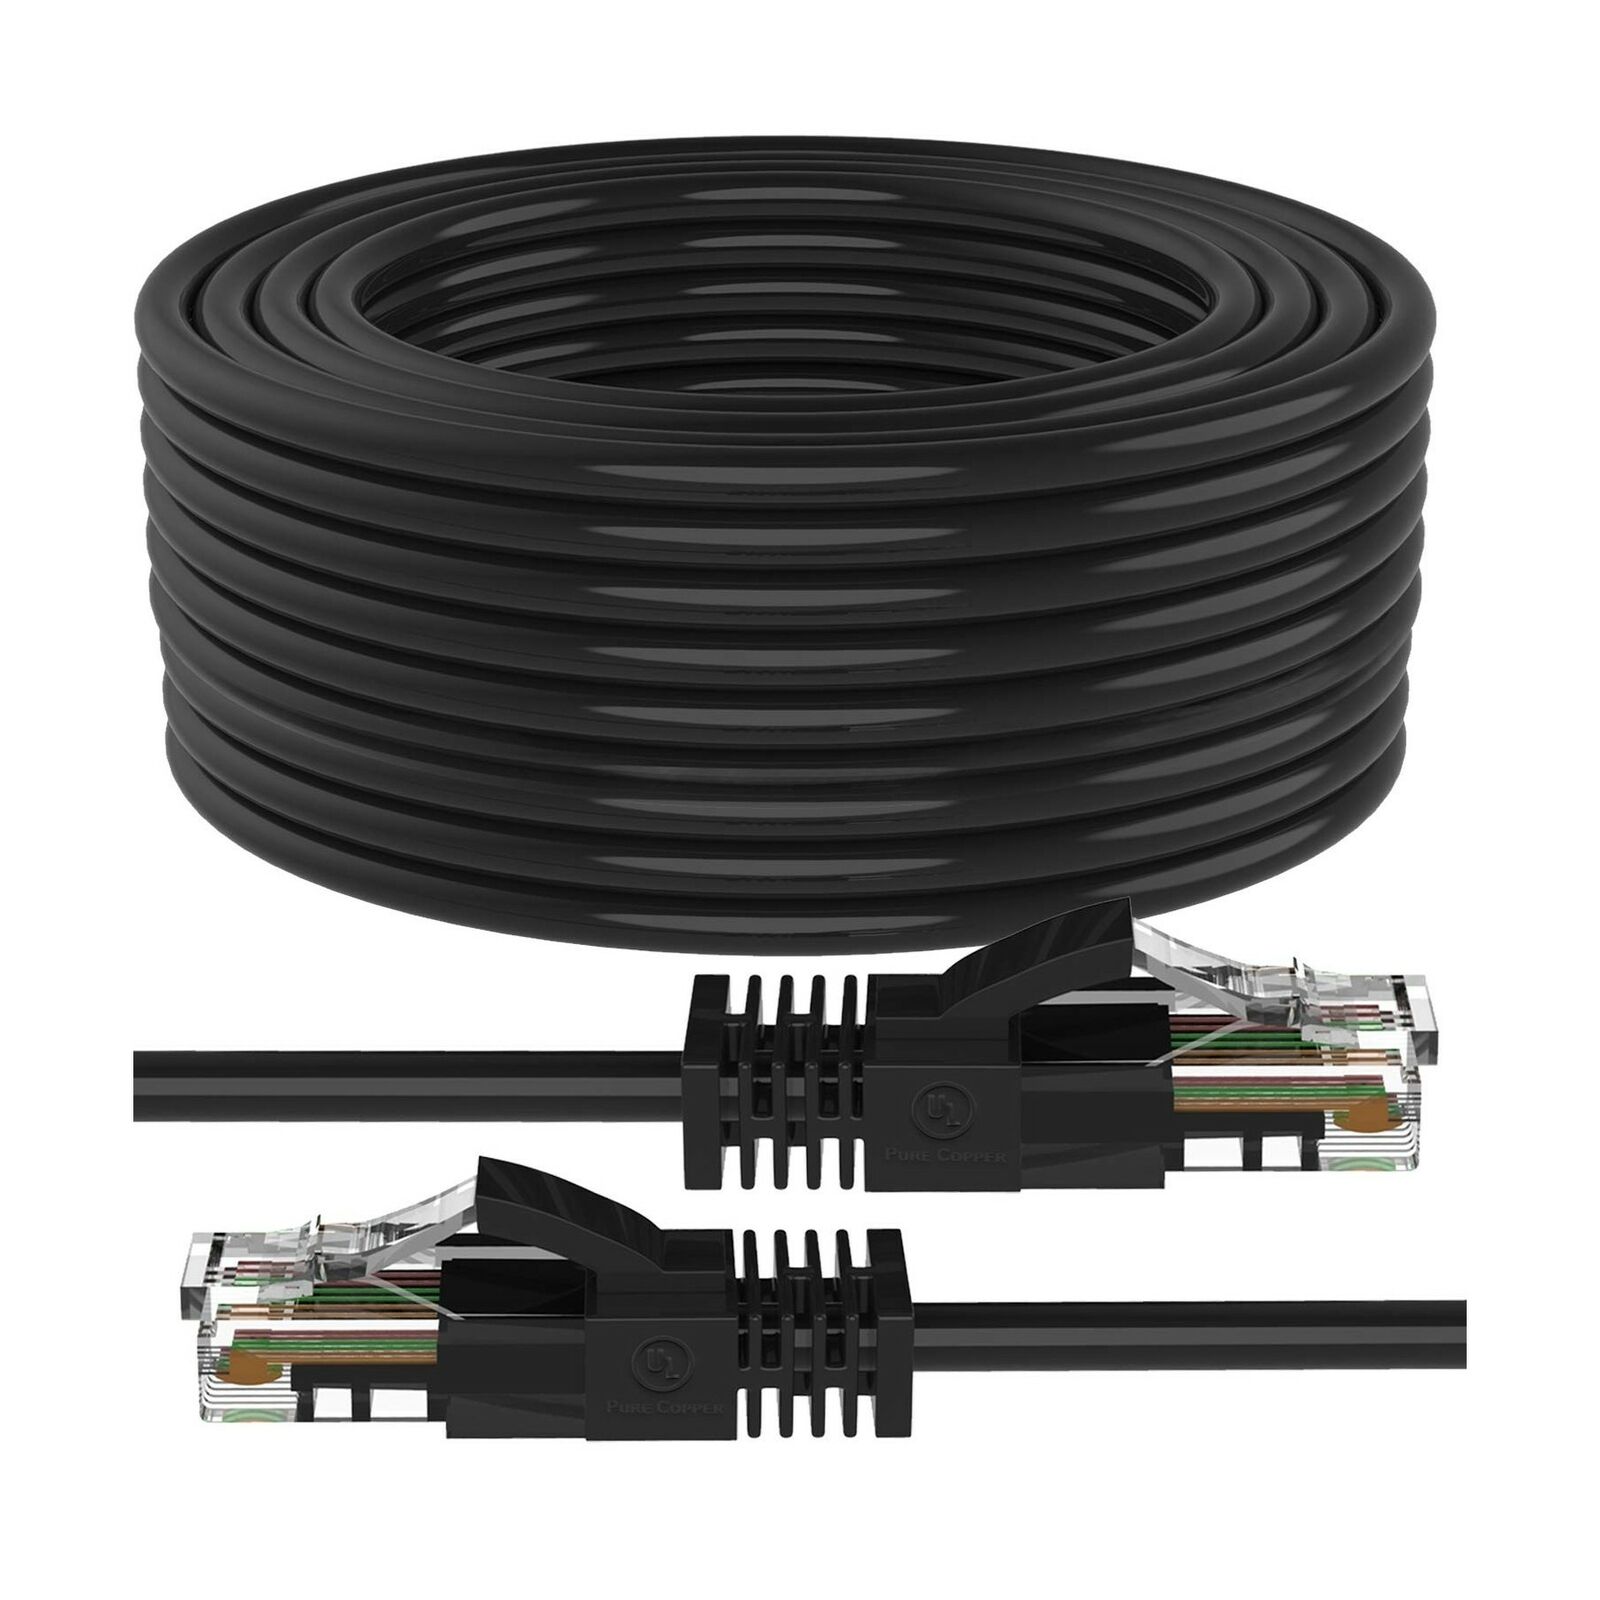 Cat 6 Ethernet Cable, 250 ft (76.2 Meters) Maximm Cat6 Cables Black - Snagles...